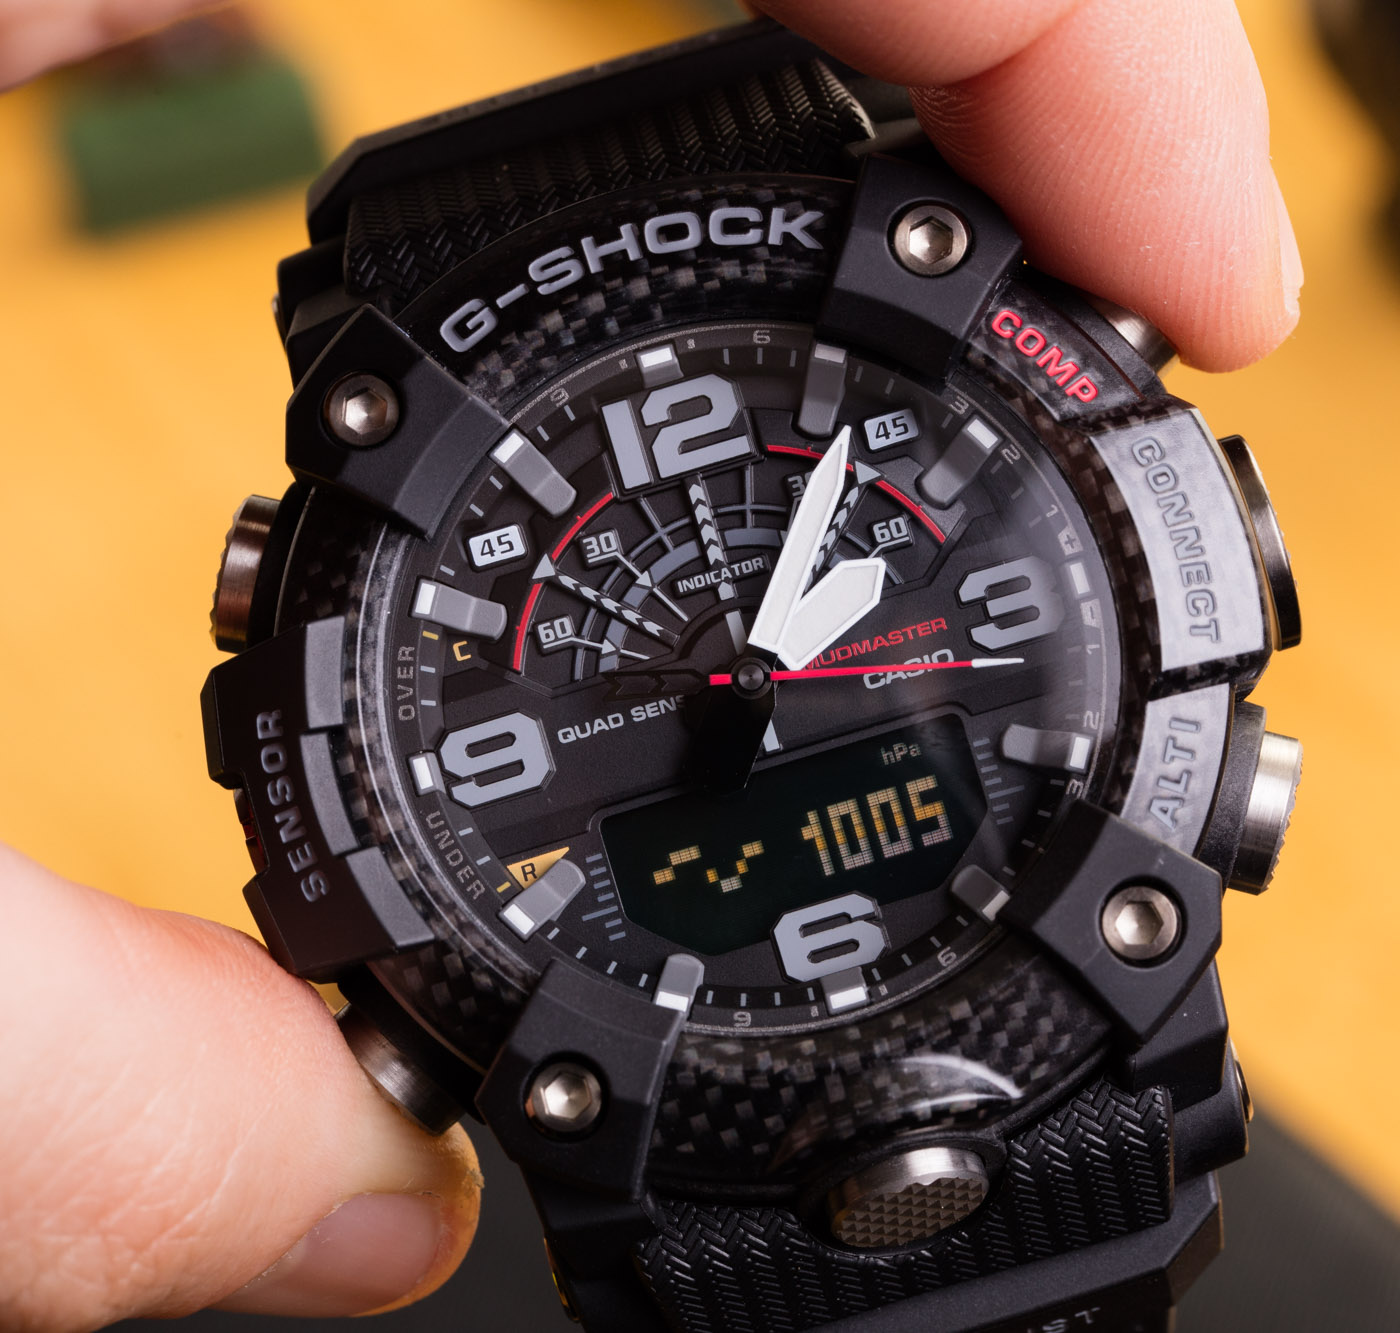 Casio G-Shock Mudmaster GG-B100 Watch Review: Full Of Style